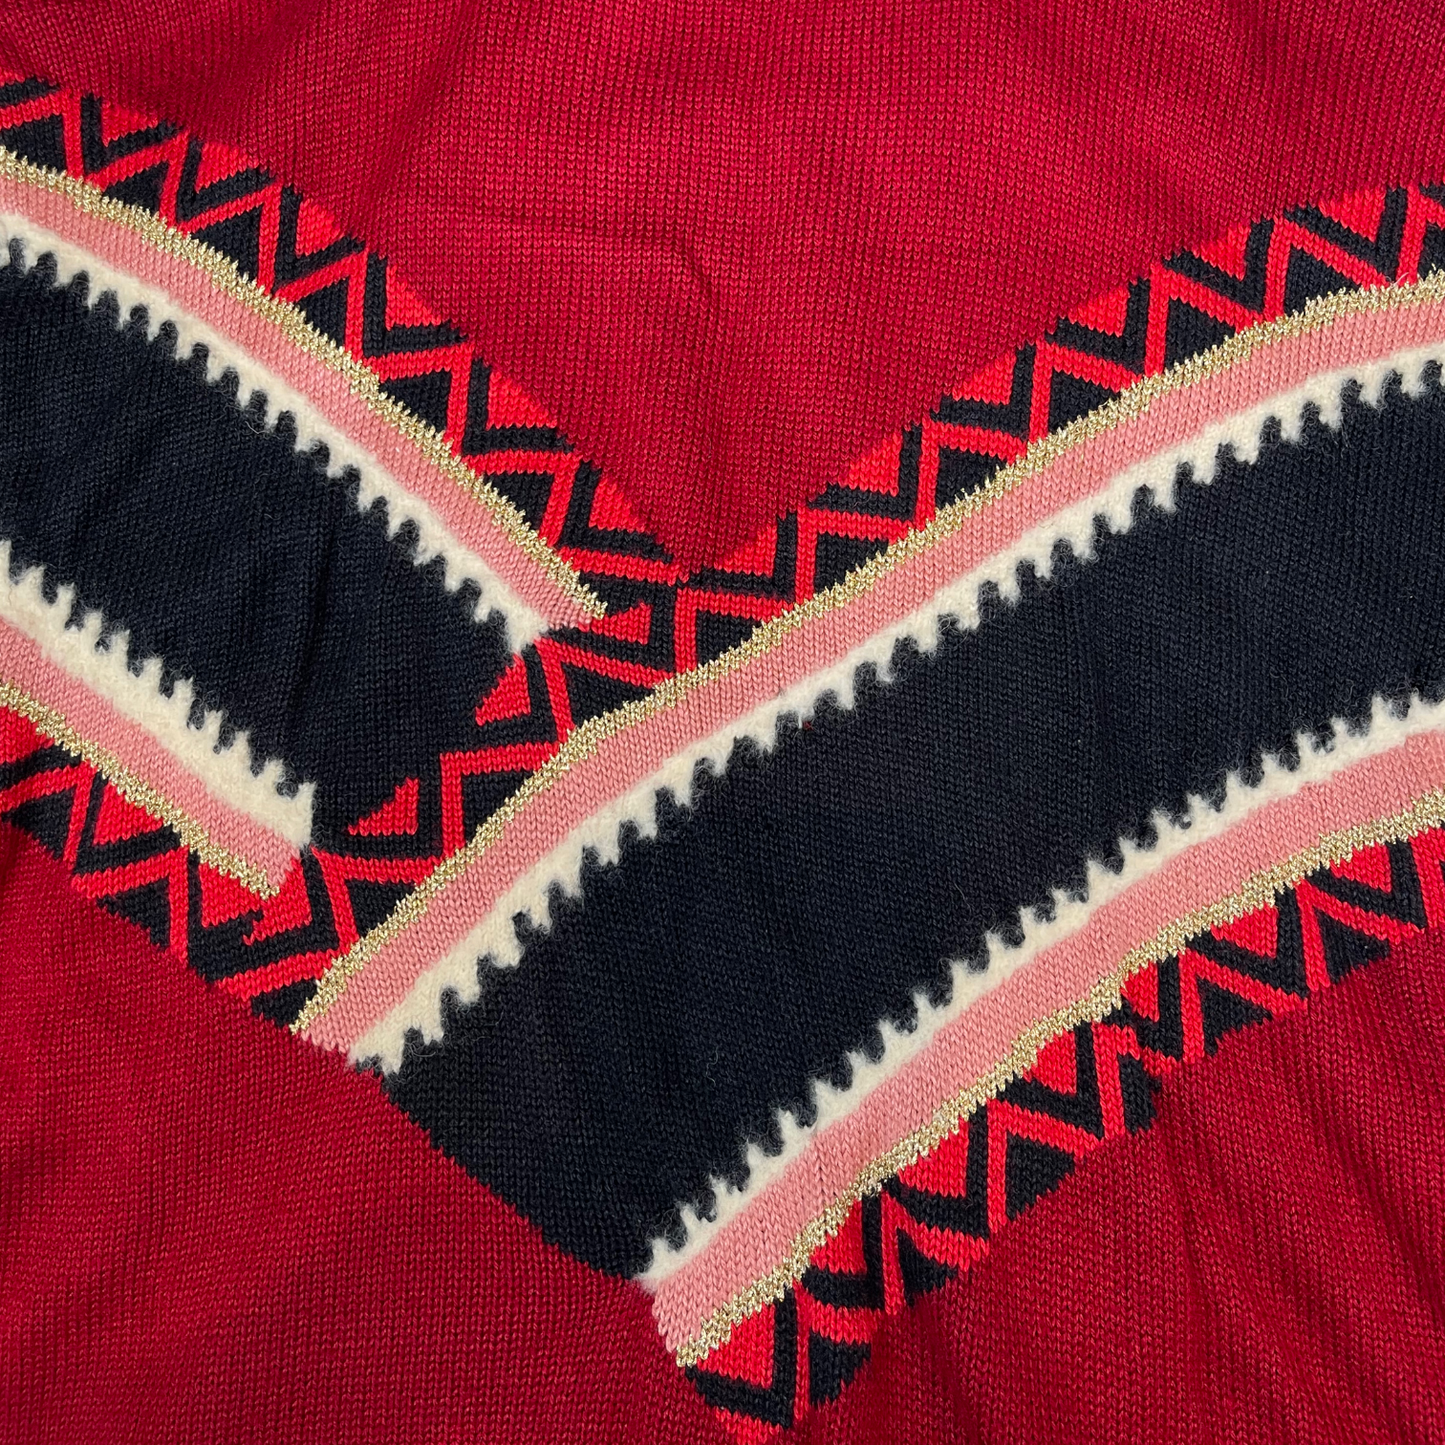 Chevron Geometric Fair Isle Turtleneck Red Black 3/4 Sleeve Holiday Knit Sweater S/M